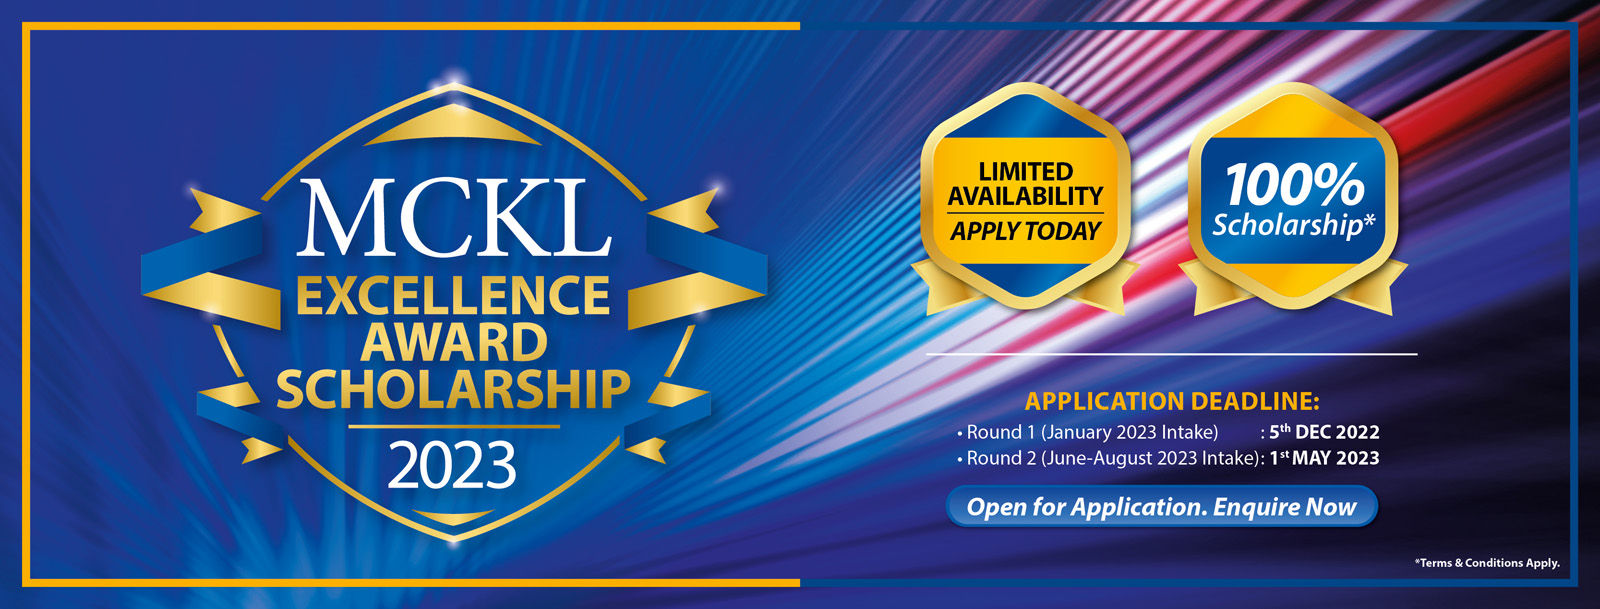 MCKL Excellence Award Scholarship 2023 – applications now open!